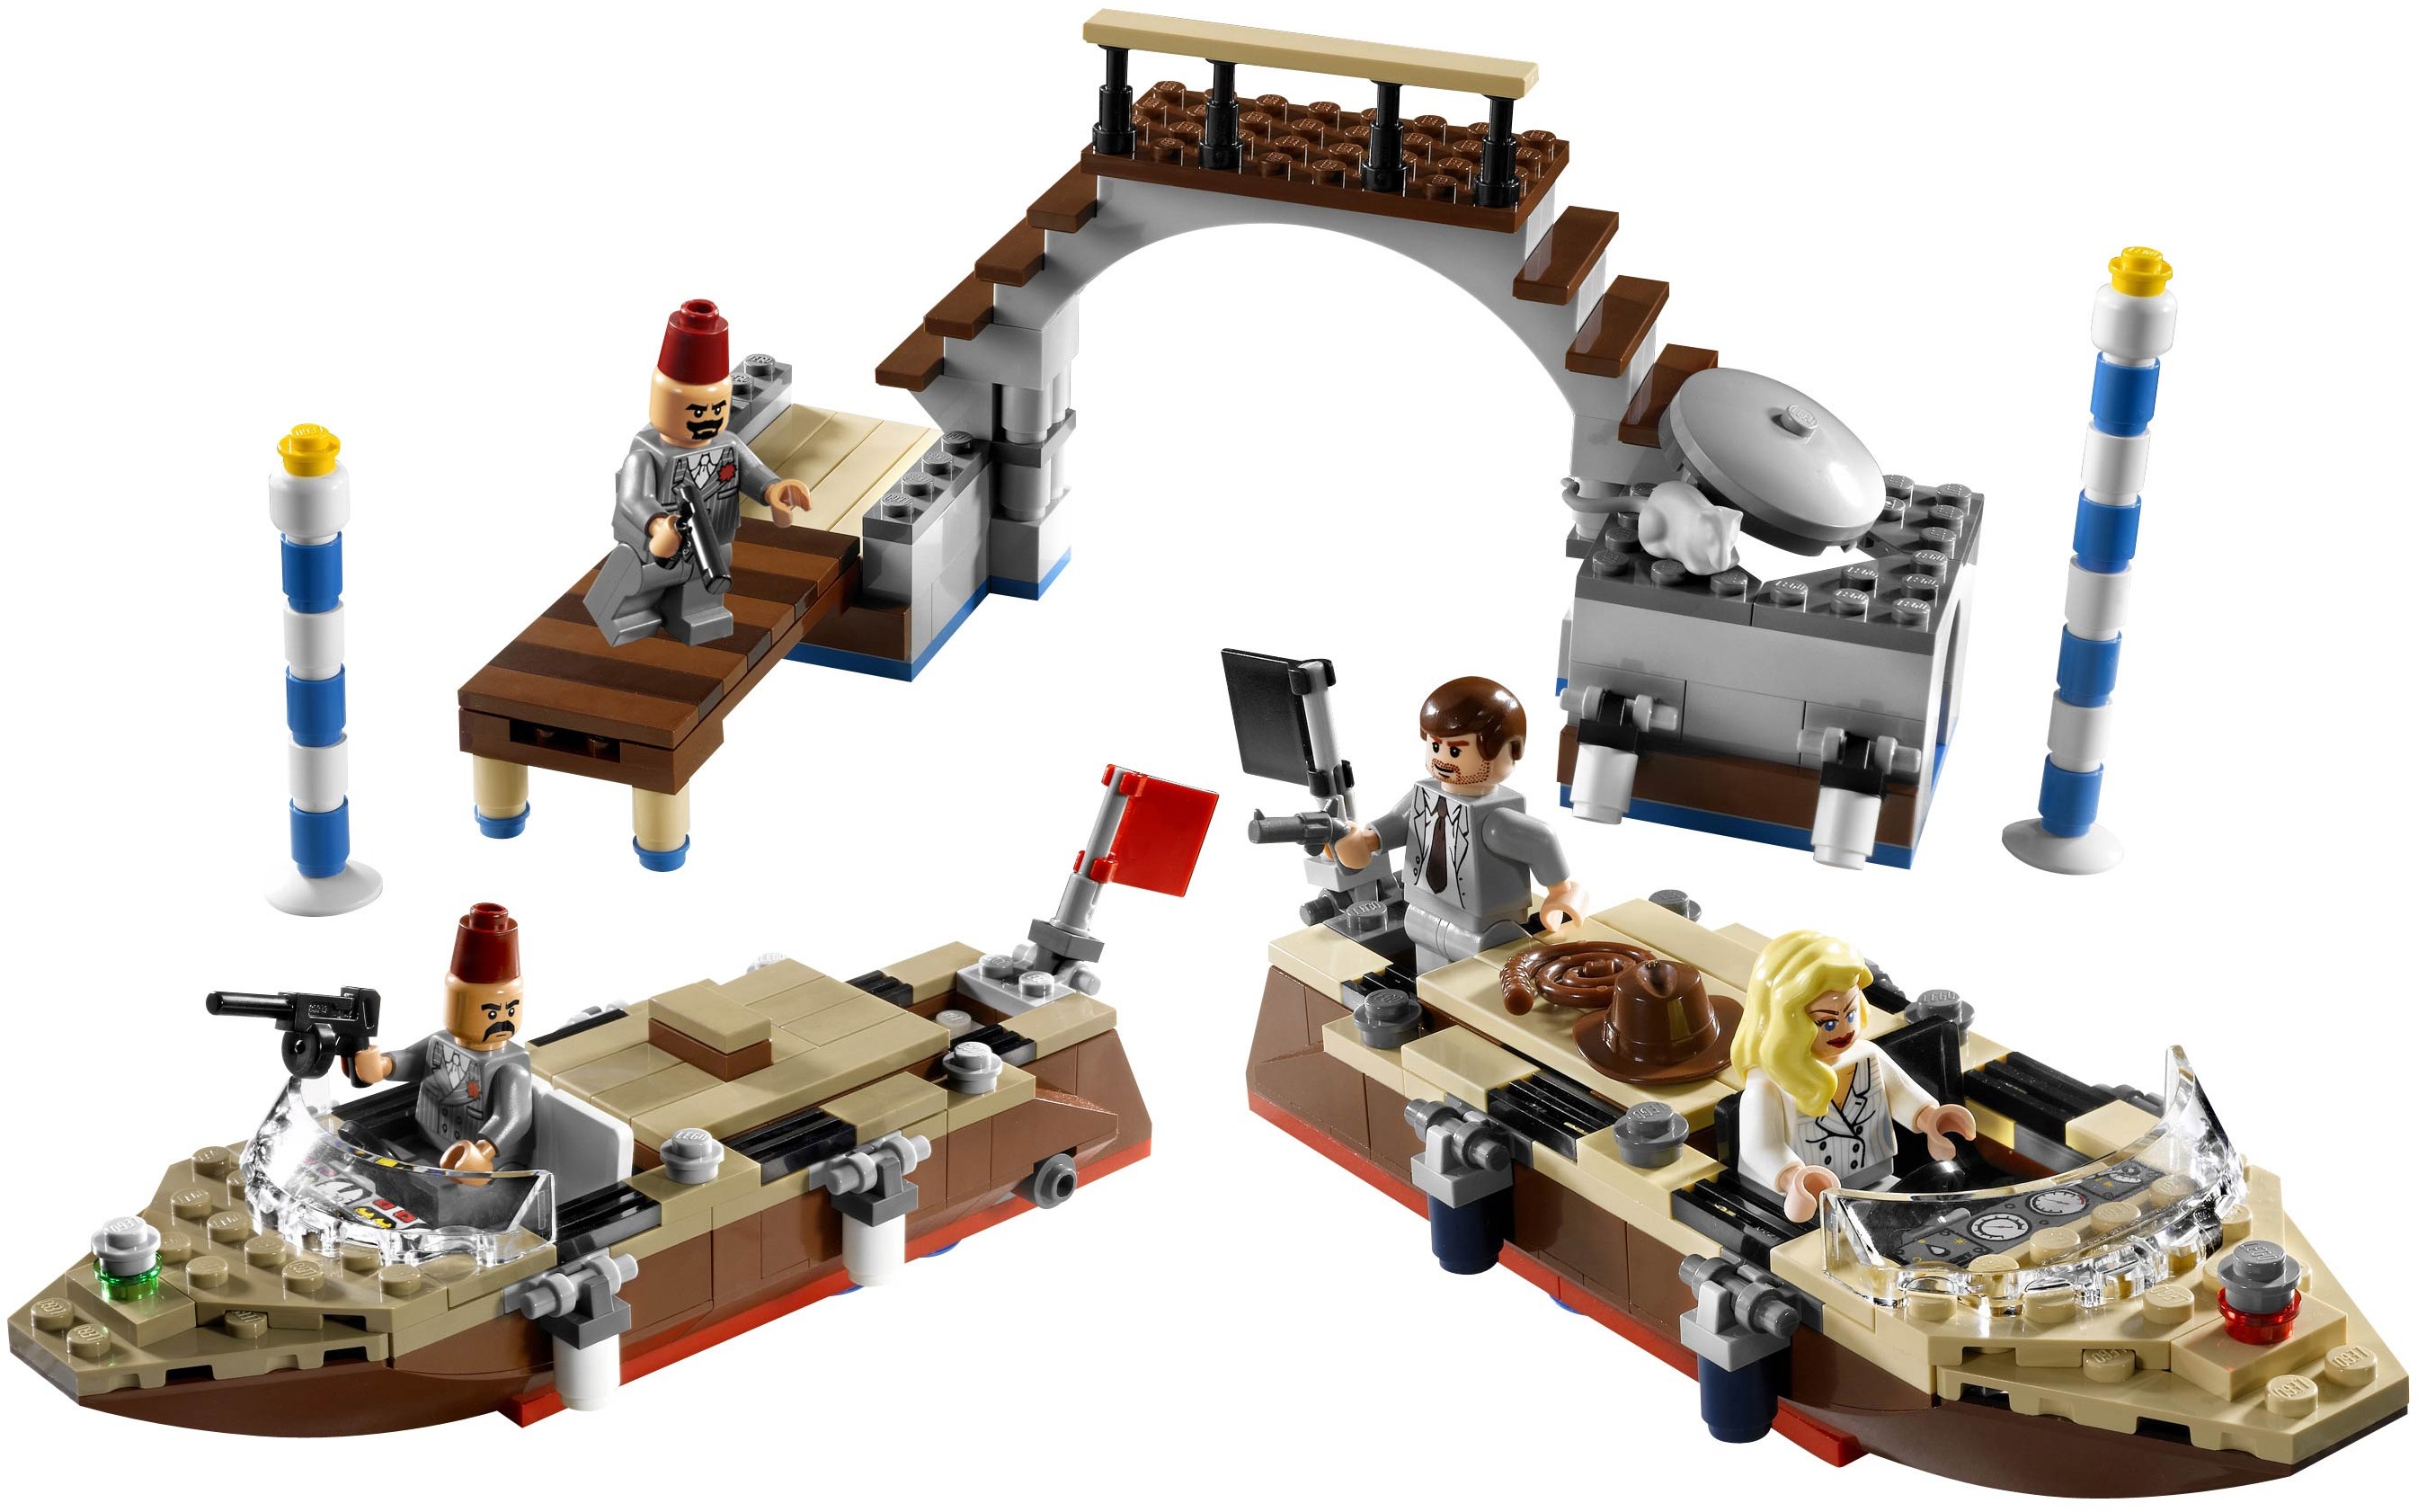 I remade a 2008 LEGO Indiana Jones Set! 